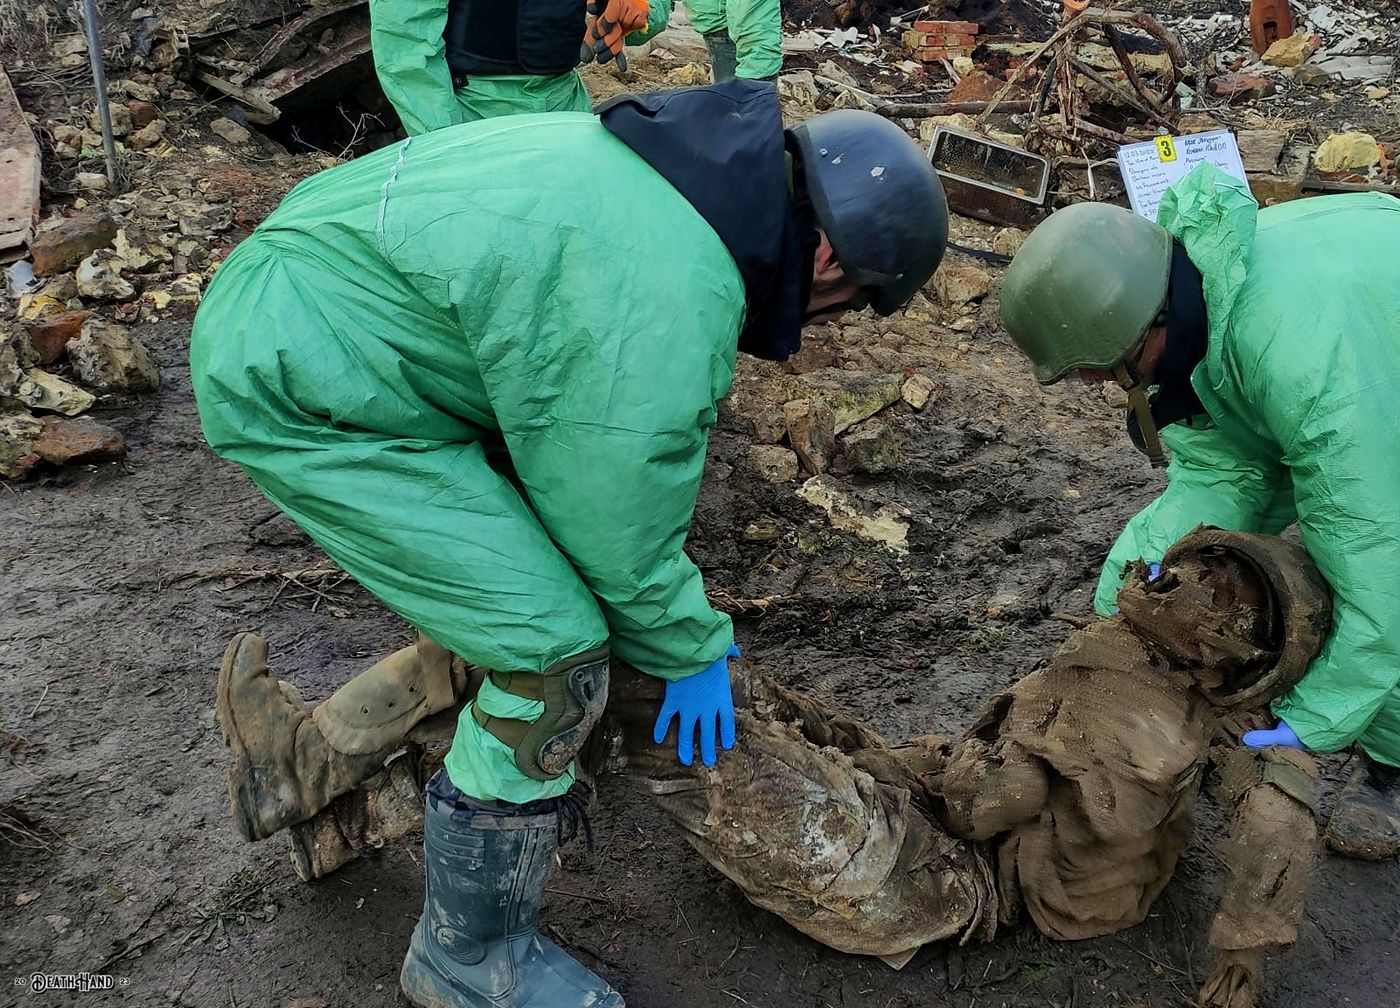 DH - Black Tulips find remove bodies 2 KIA RU soldiers from cellar one yr after died 4 - Krasn...jpg